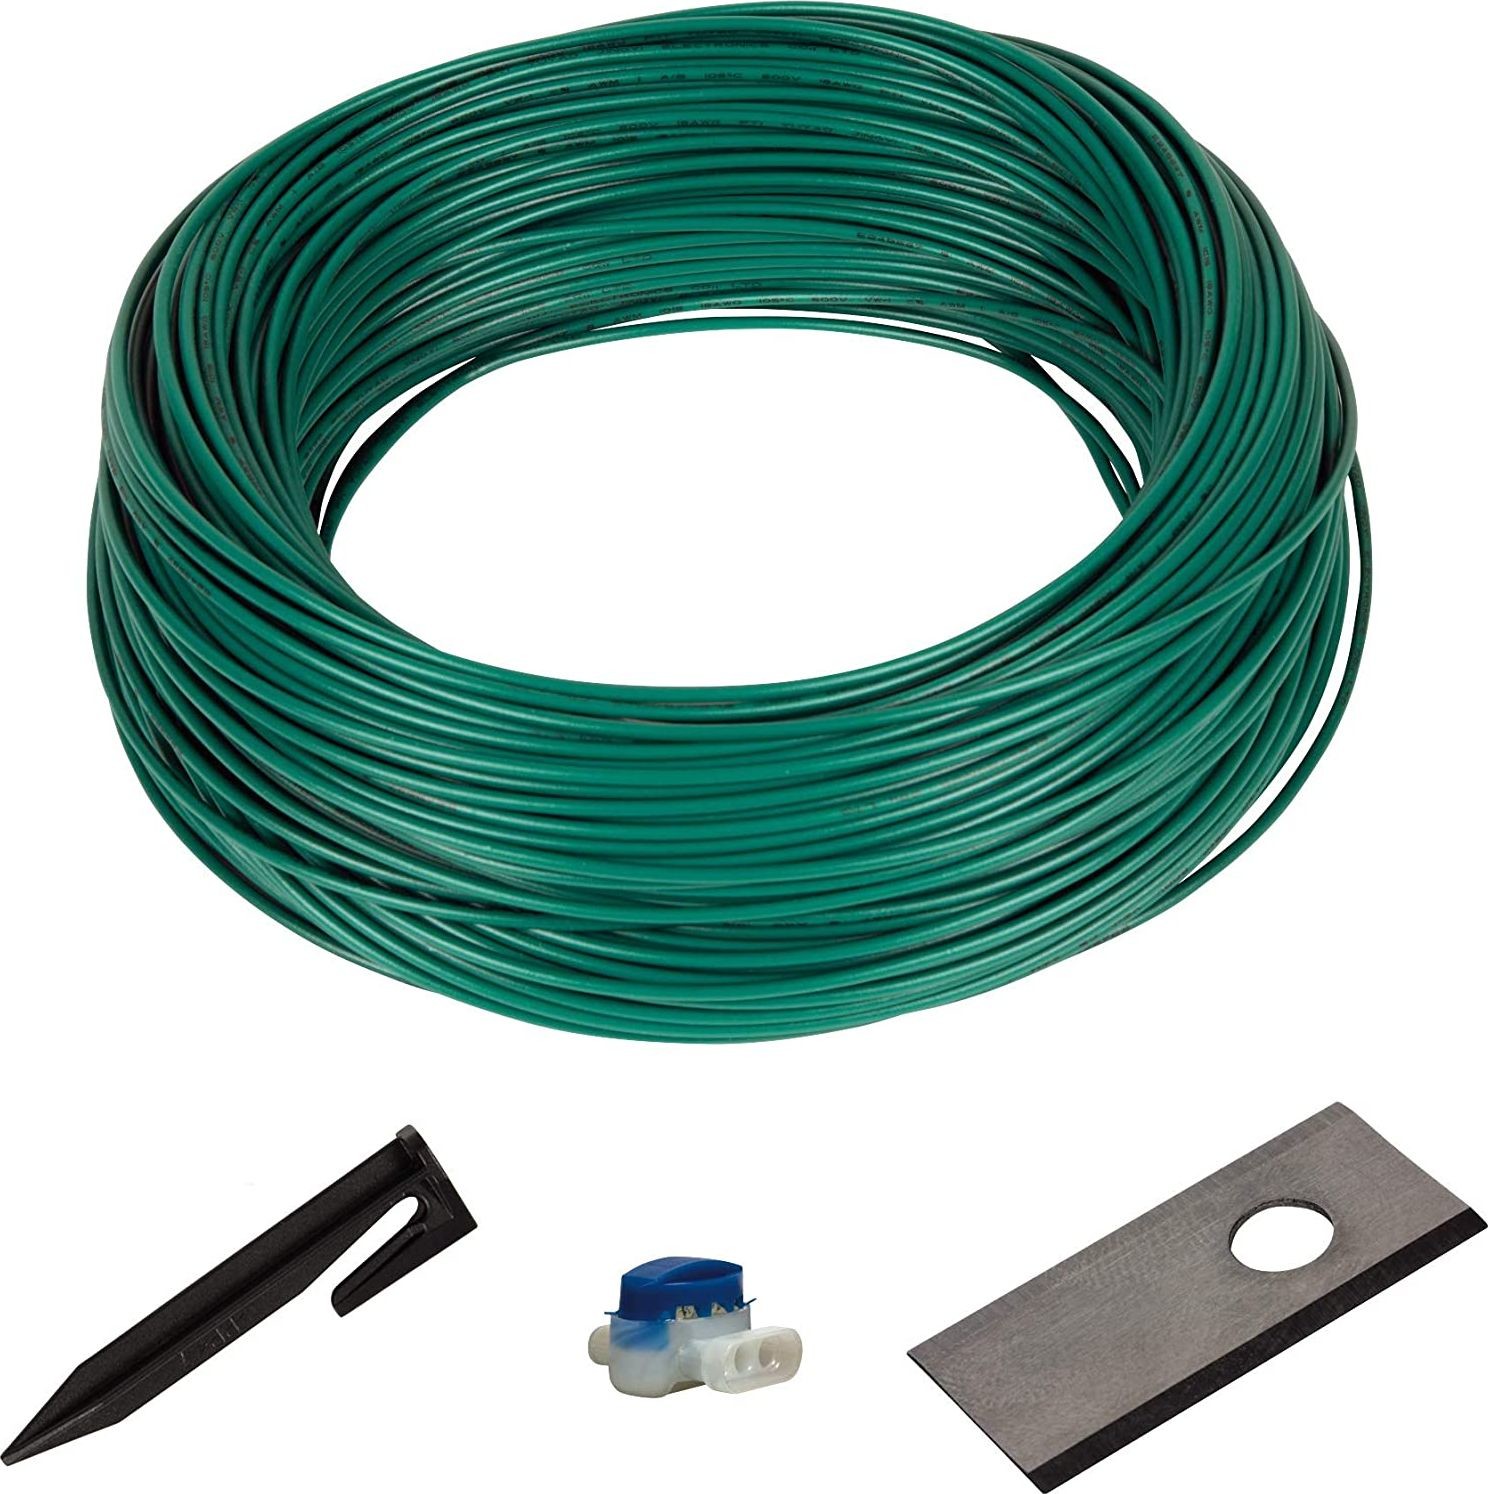 Einhell Einhell Cable Kit 700m2 3414002 3414002